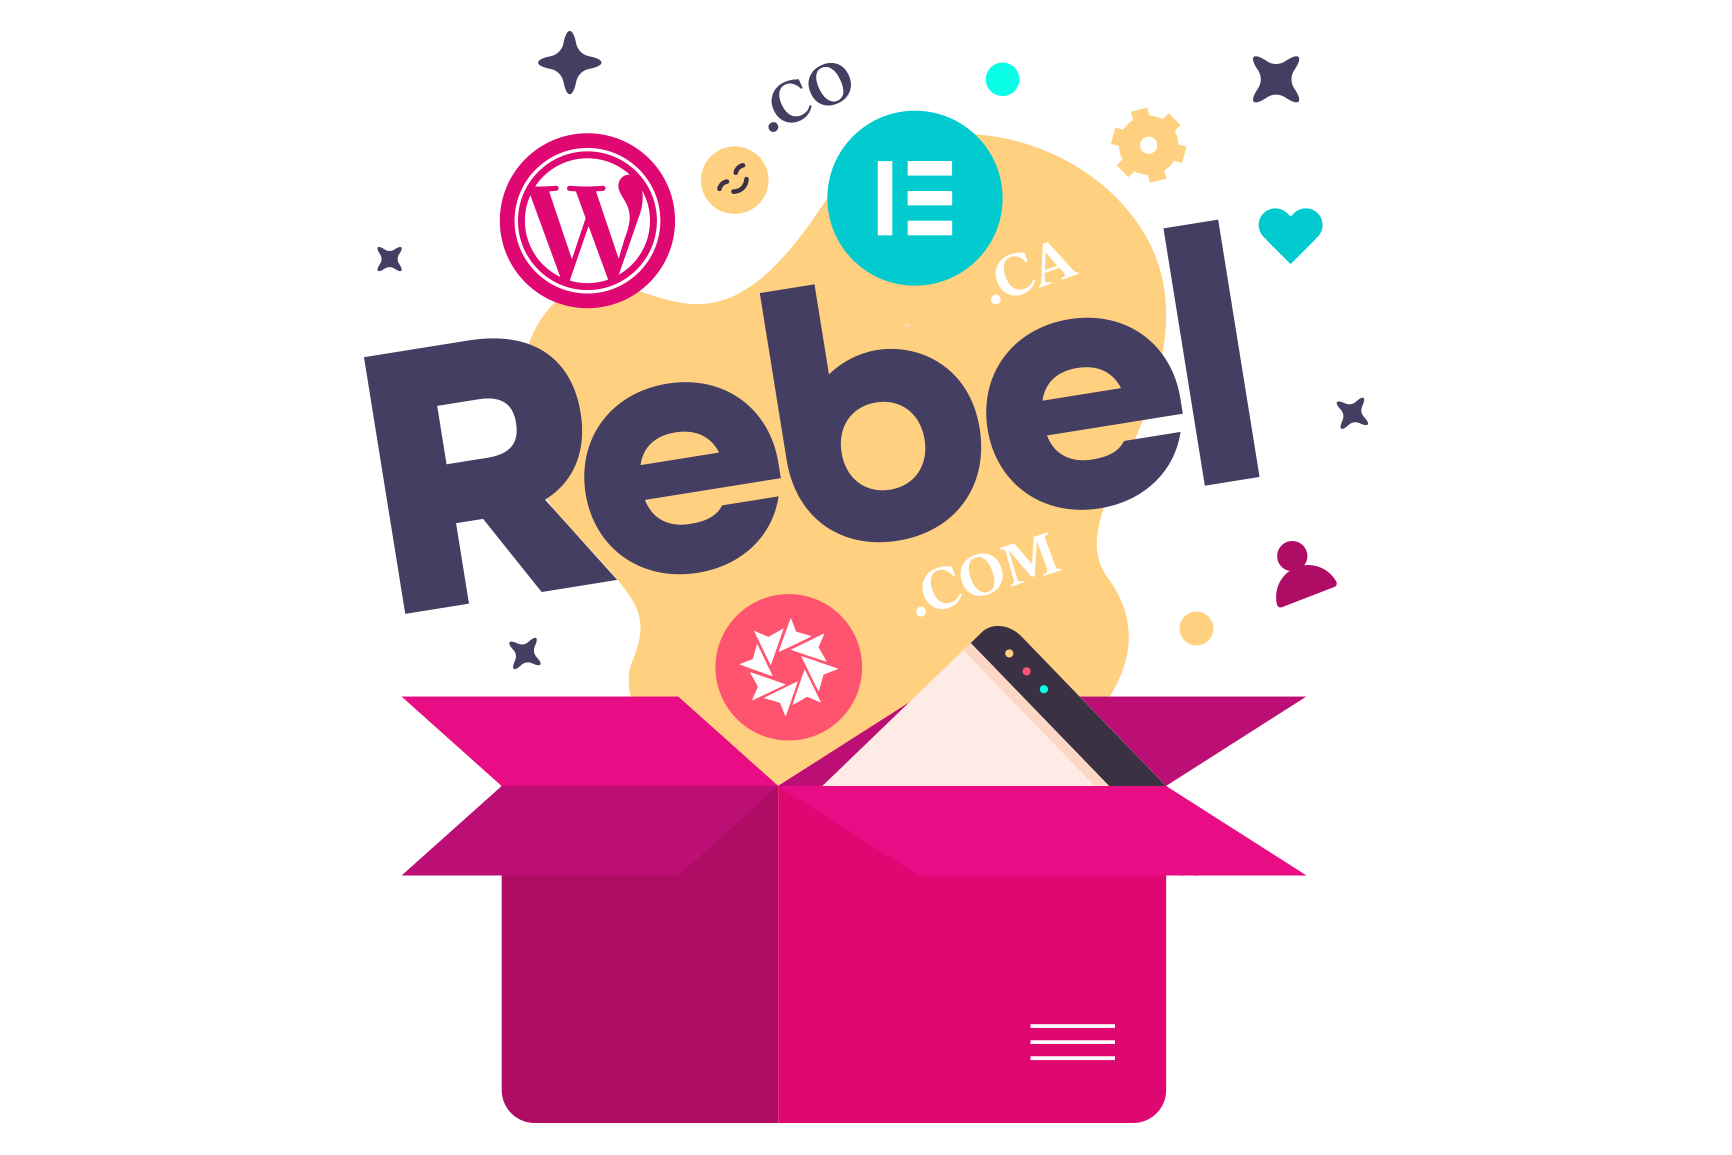 (c) Rebel.com